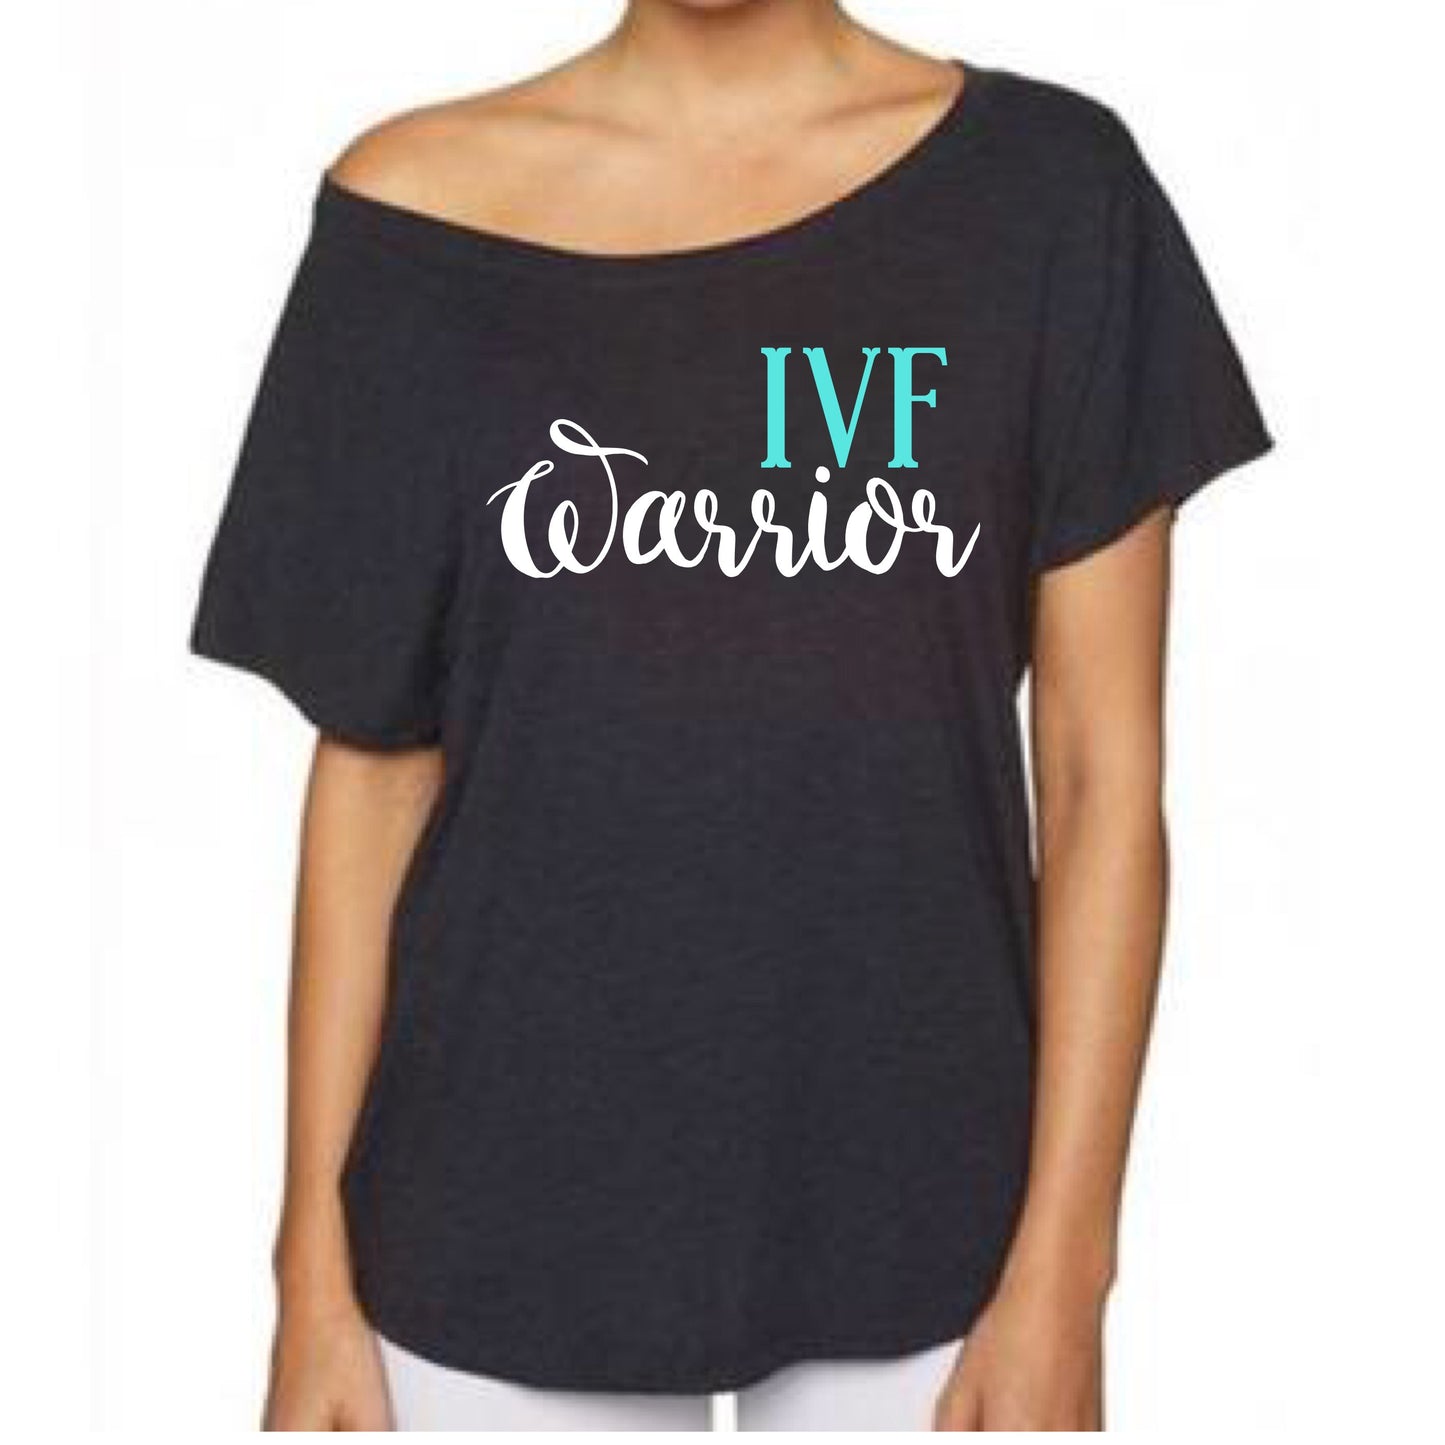 ivf warrior| TWW shirt| IVF shirt| Infertility shirt| IVF Warrior| Transfer day shirt| ivf transfer day shirt| infertility shirt